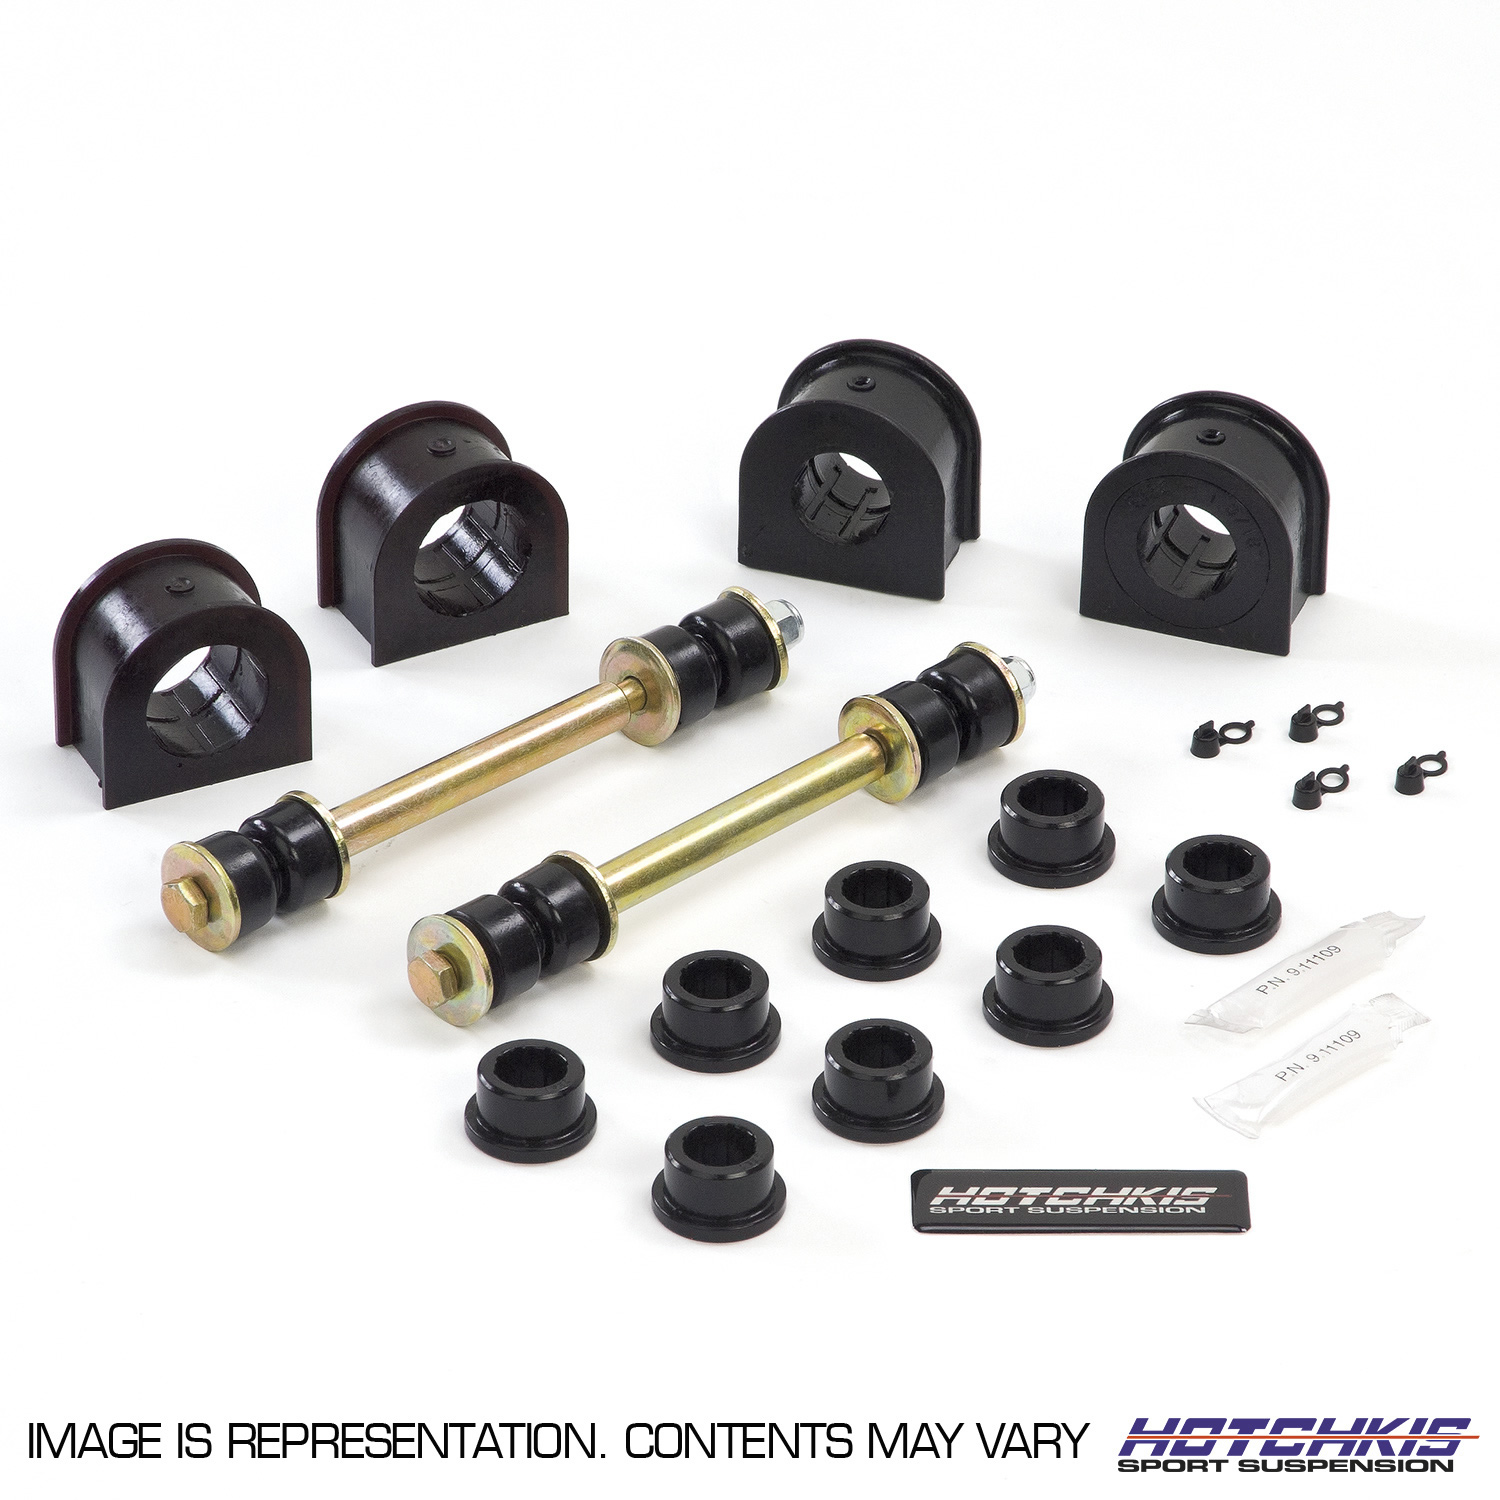 Rebuild Service Kit For Hotchkis Sport Suspension Product Kit 2280